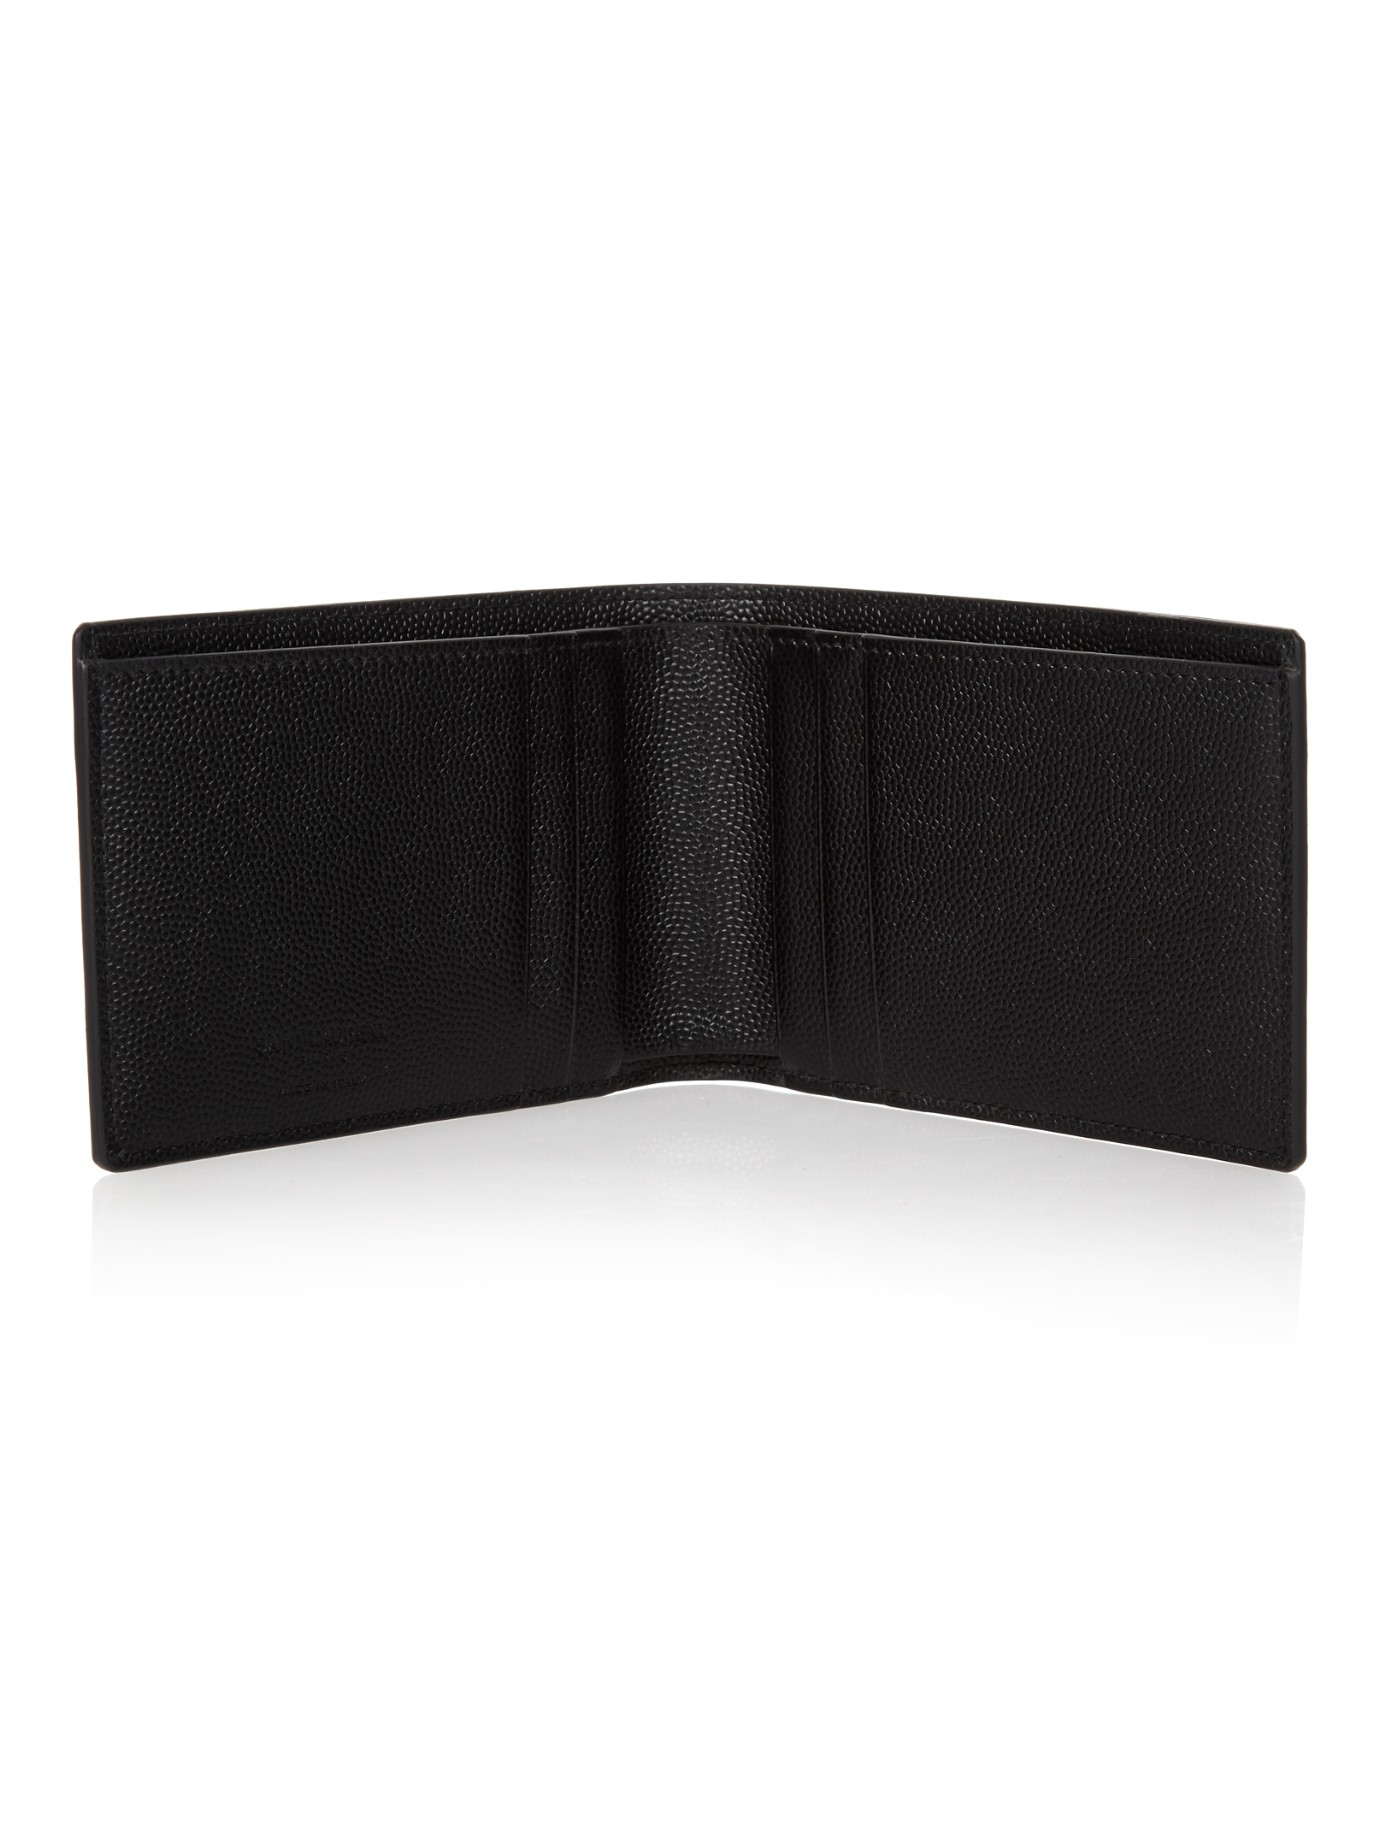 Saint Laurent Grained-Leather Bi-Fold Wallet in Black for Men - Lyst